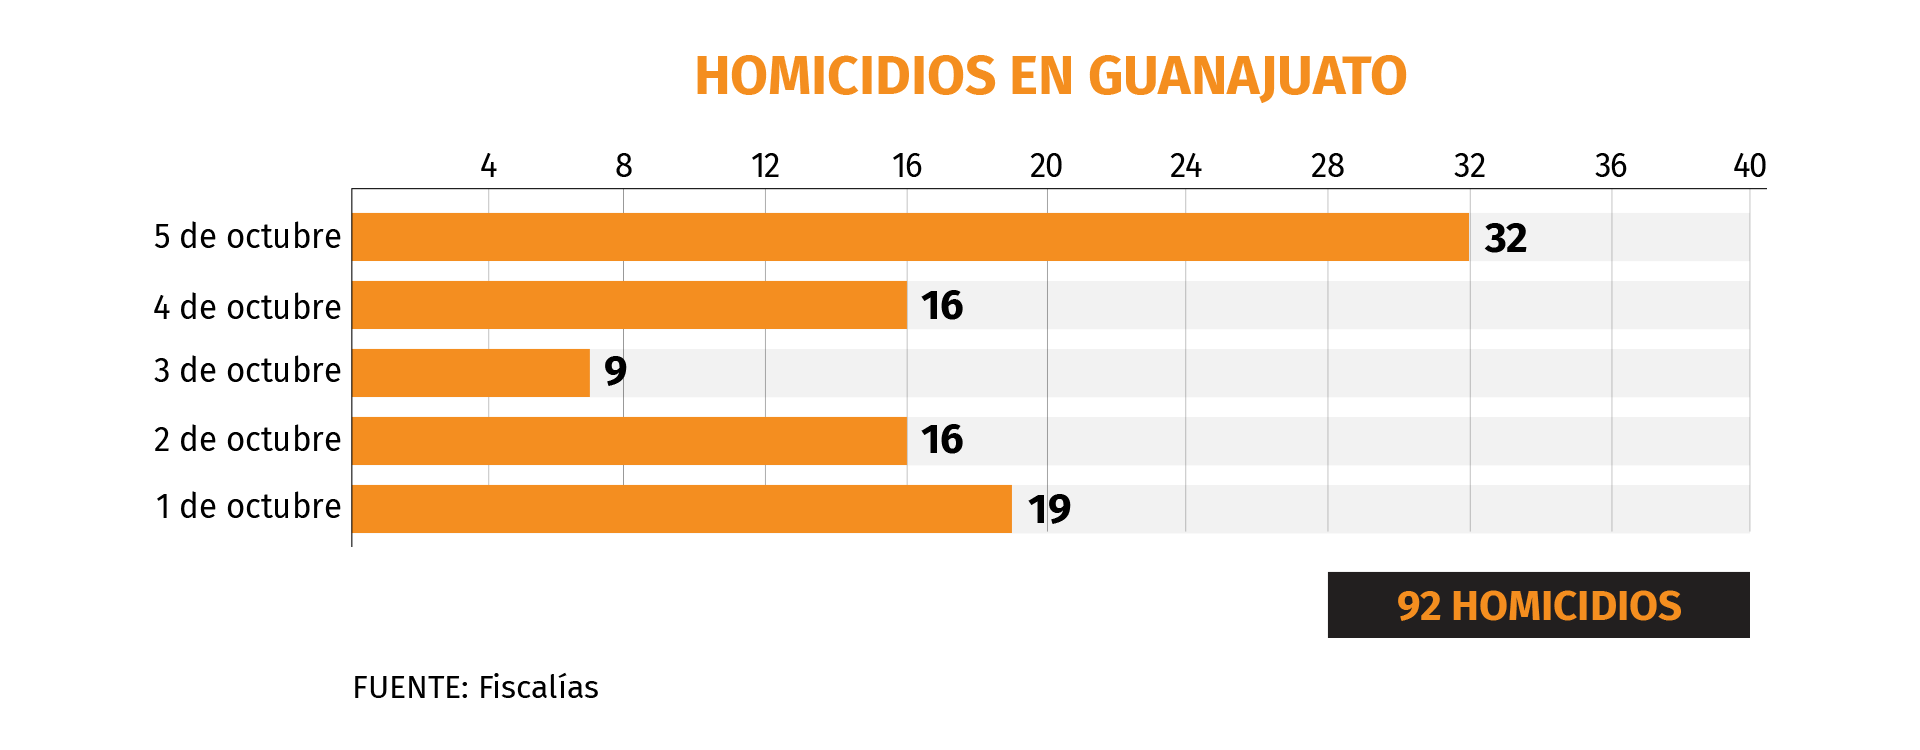 (Gráfico: Infobae México)